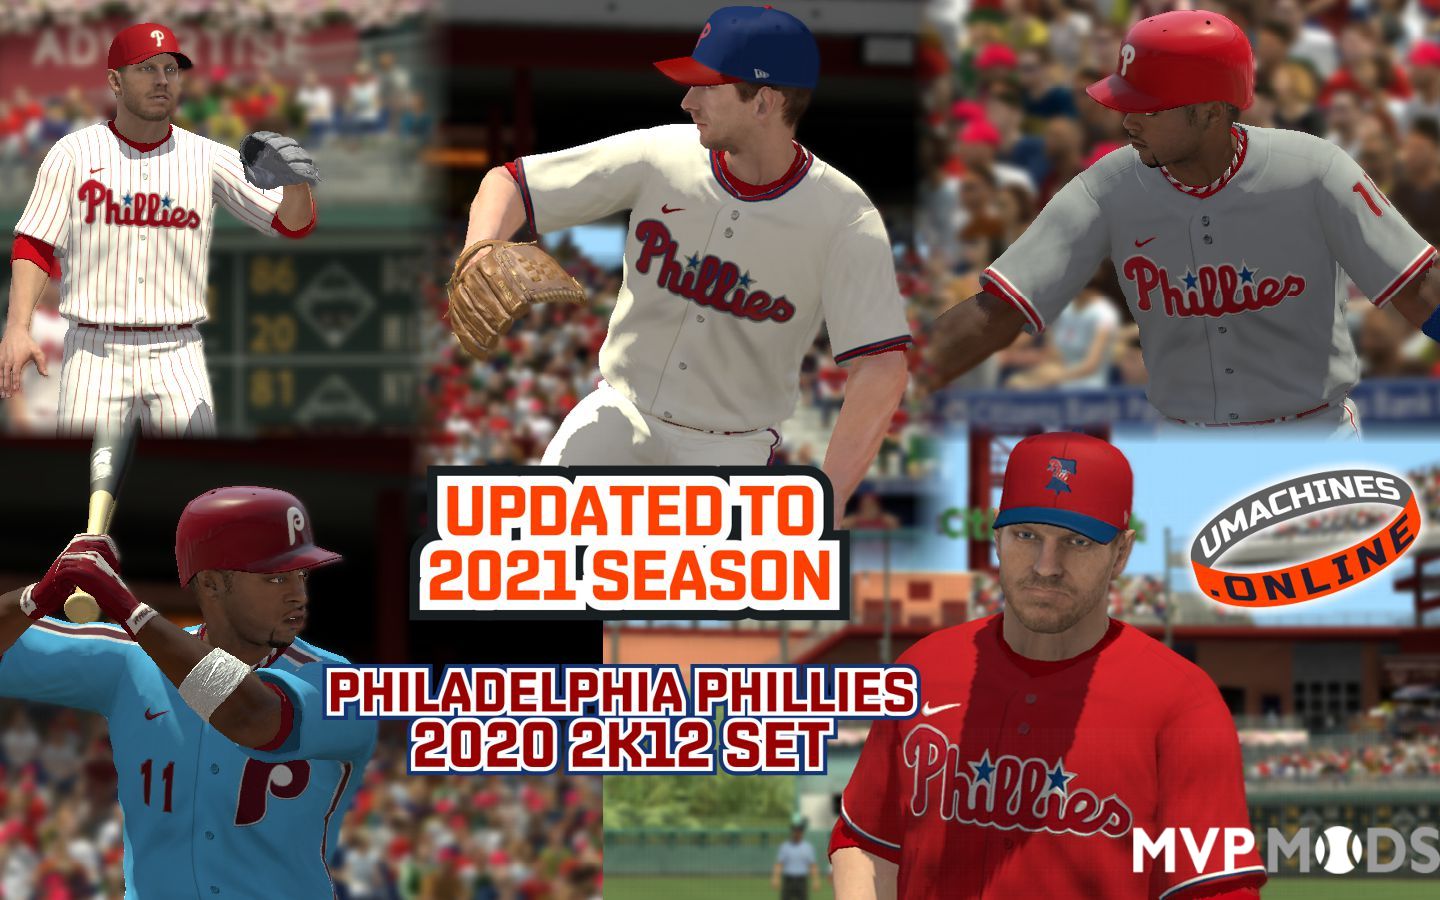 2020/2021 Philadelphia Phillies Uniform Set - Uniforms - MVP Mods